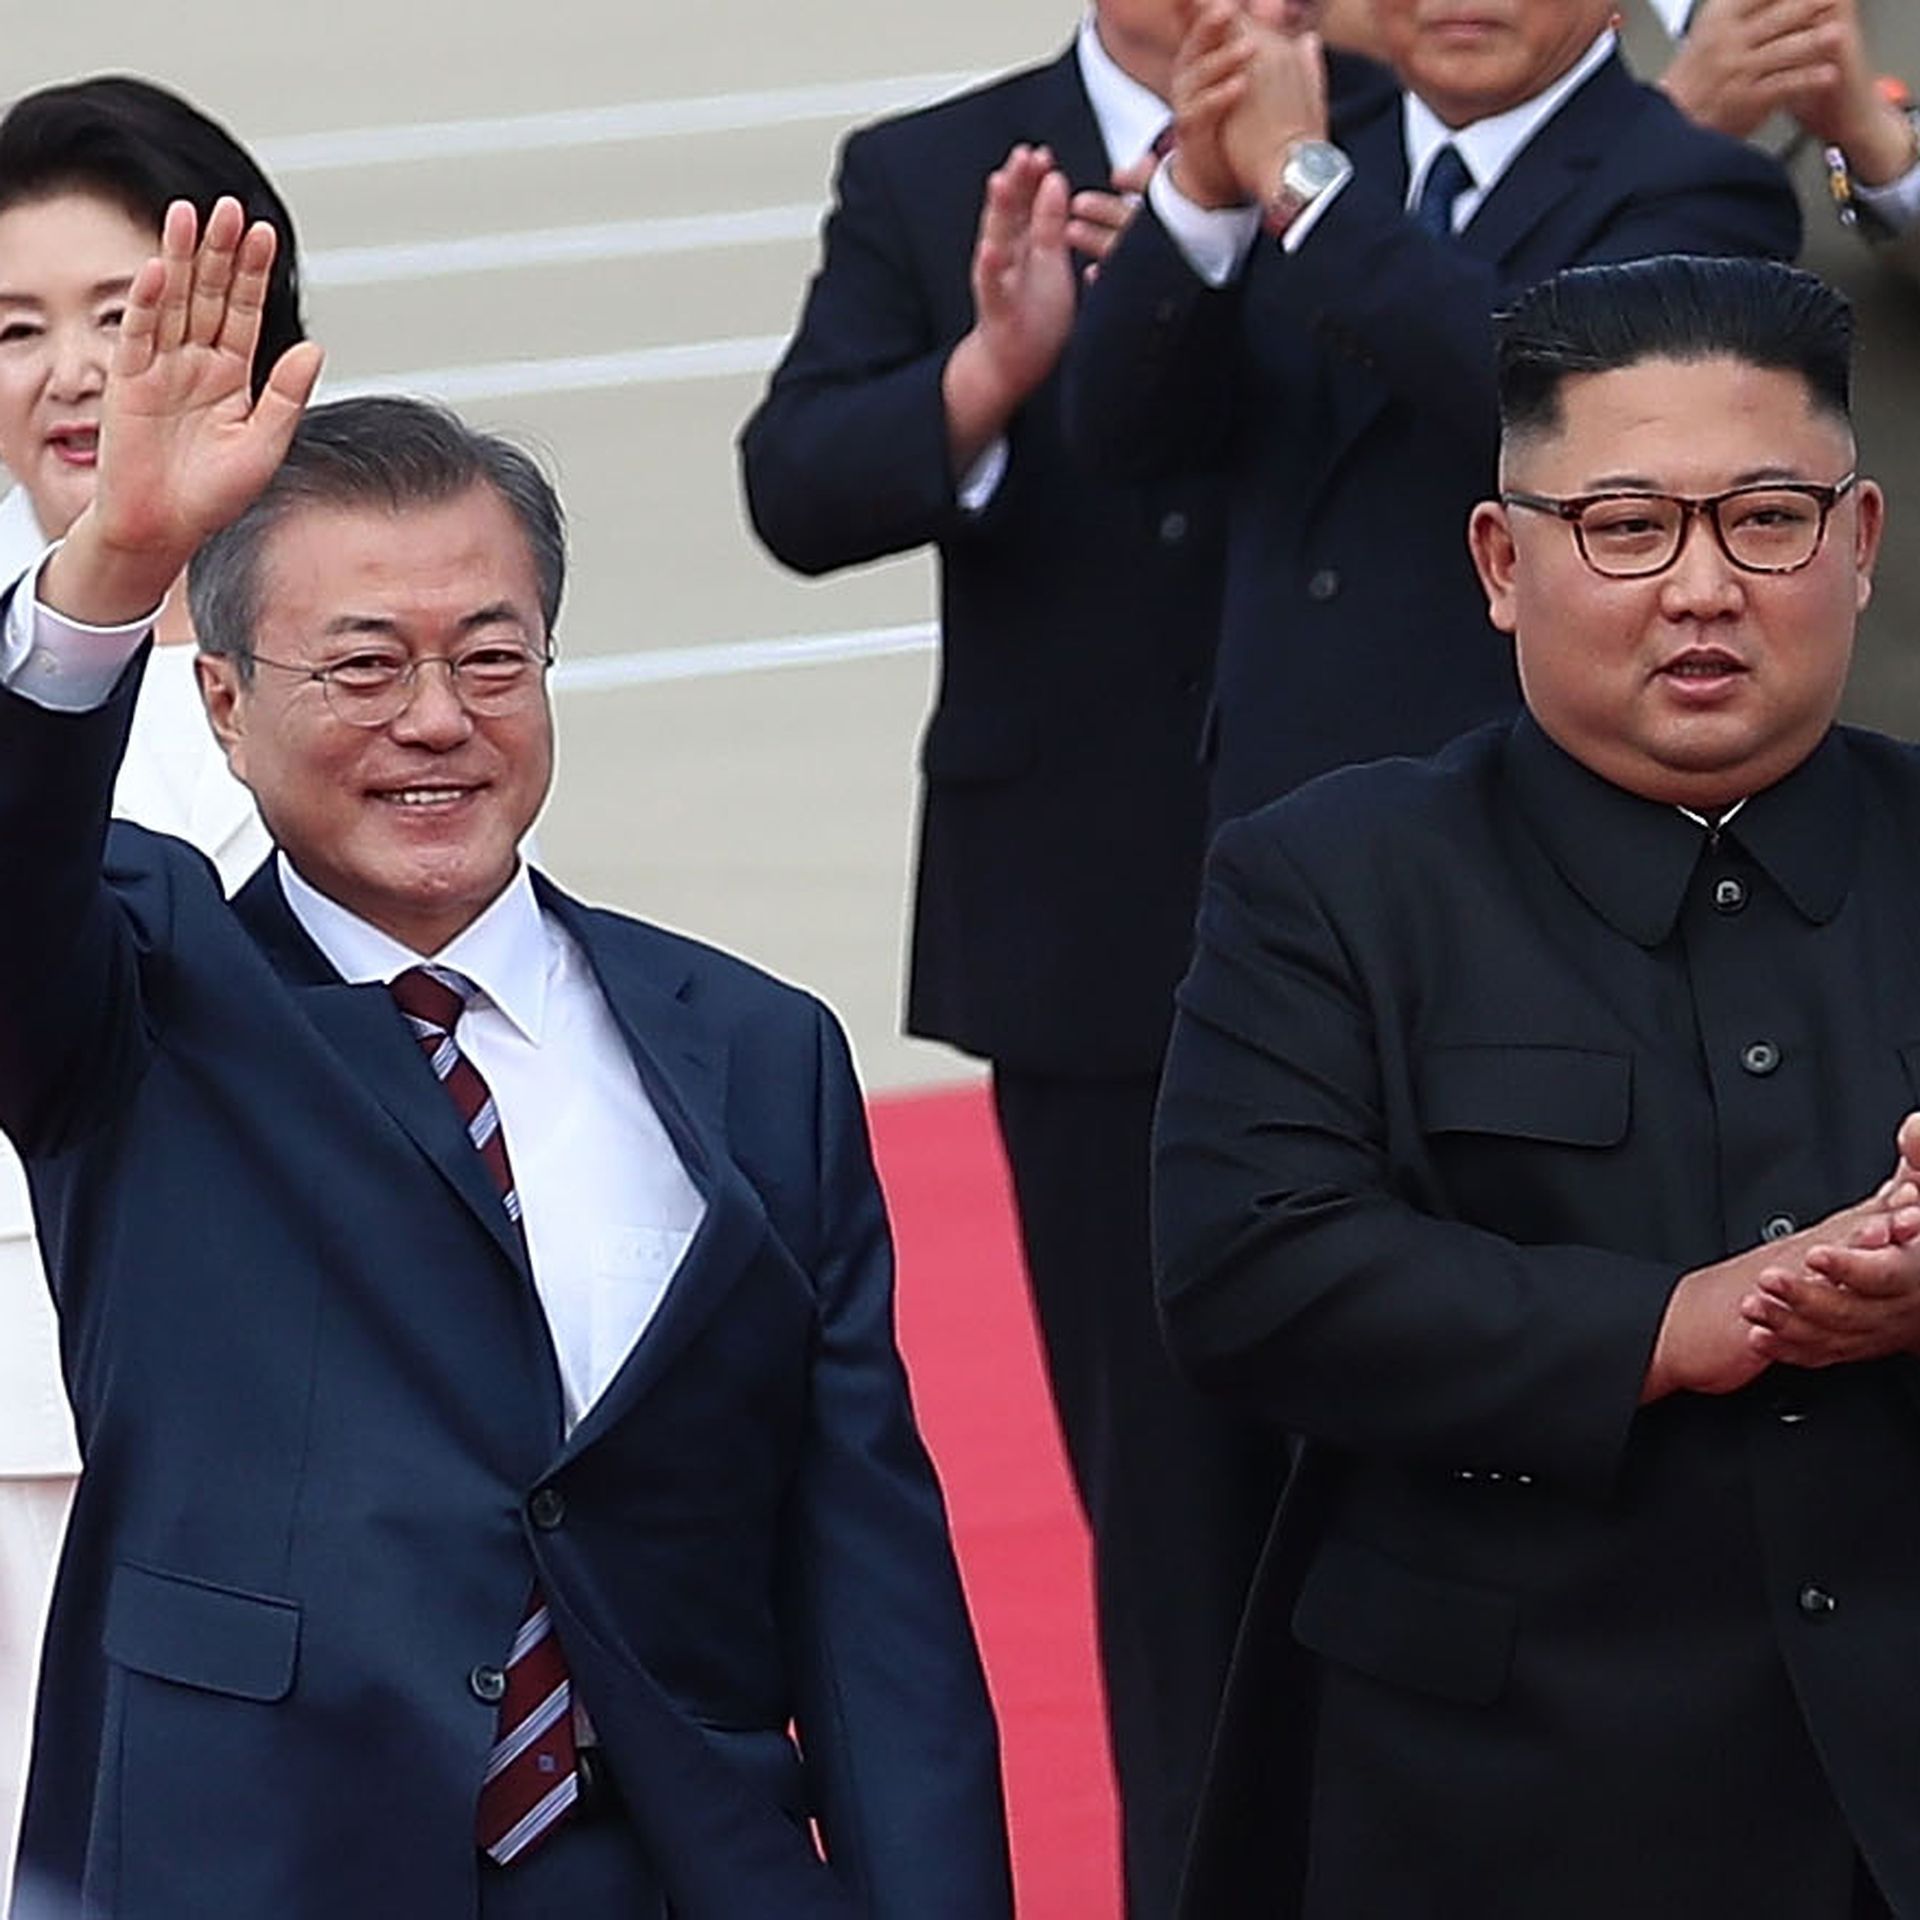 North Korean Leader Kim Jong Un meets with South Korean President Moon Jae-in for the Inter-Korean Summit at Pyongyang Sunan International Airport on September 18, 2018.